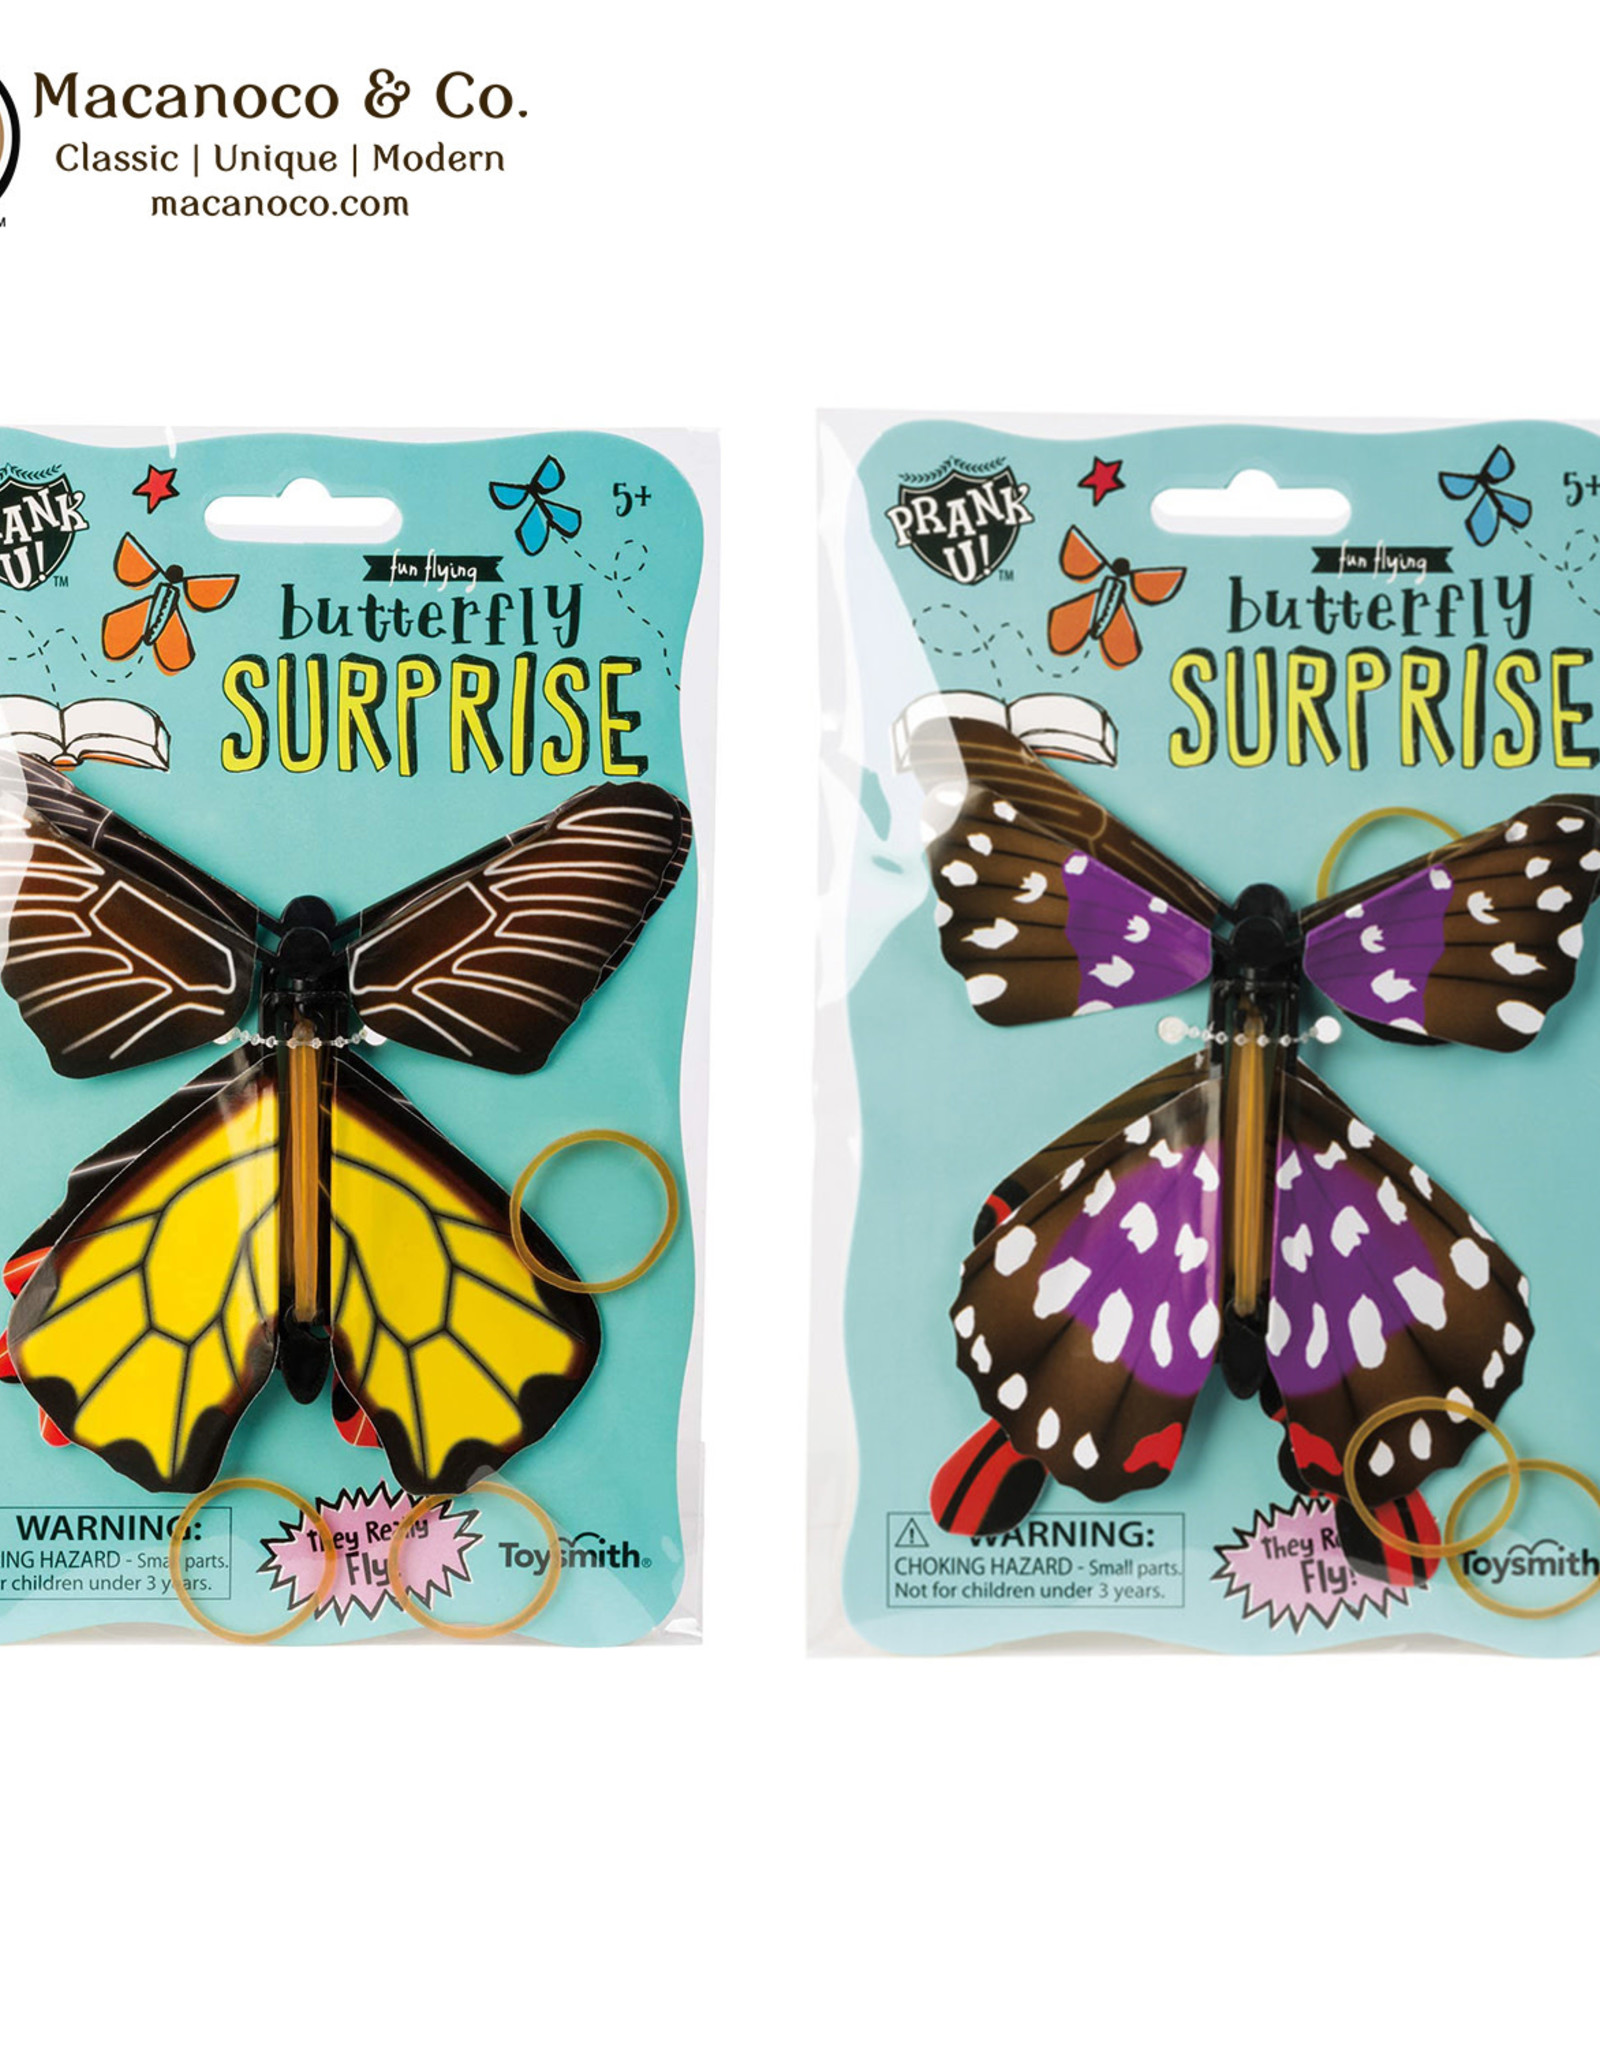 Toysmith PRANK U! Fun Flying Butterfly Surprise